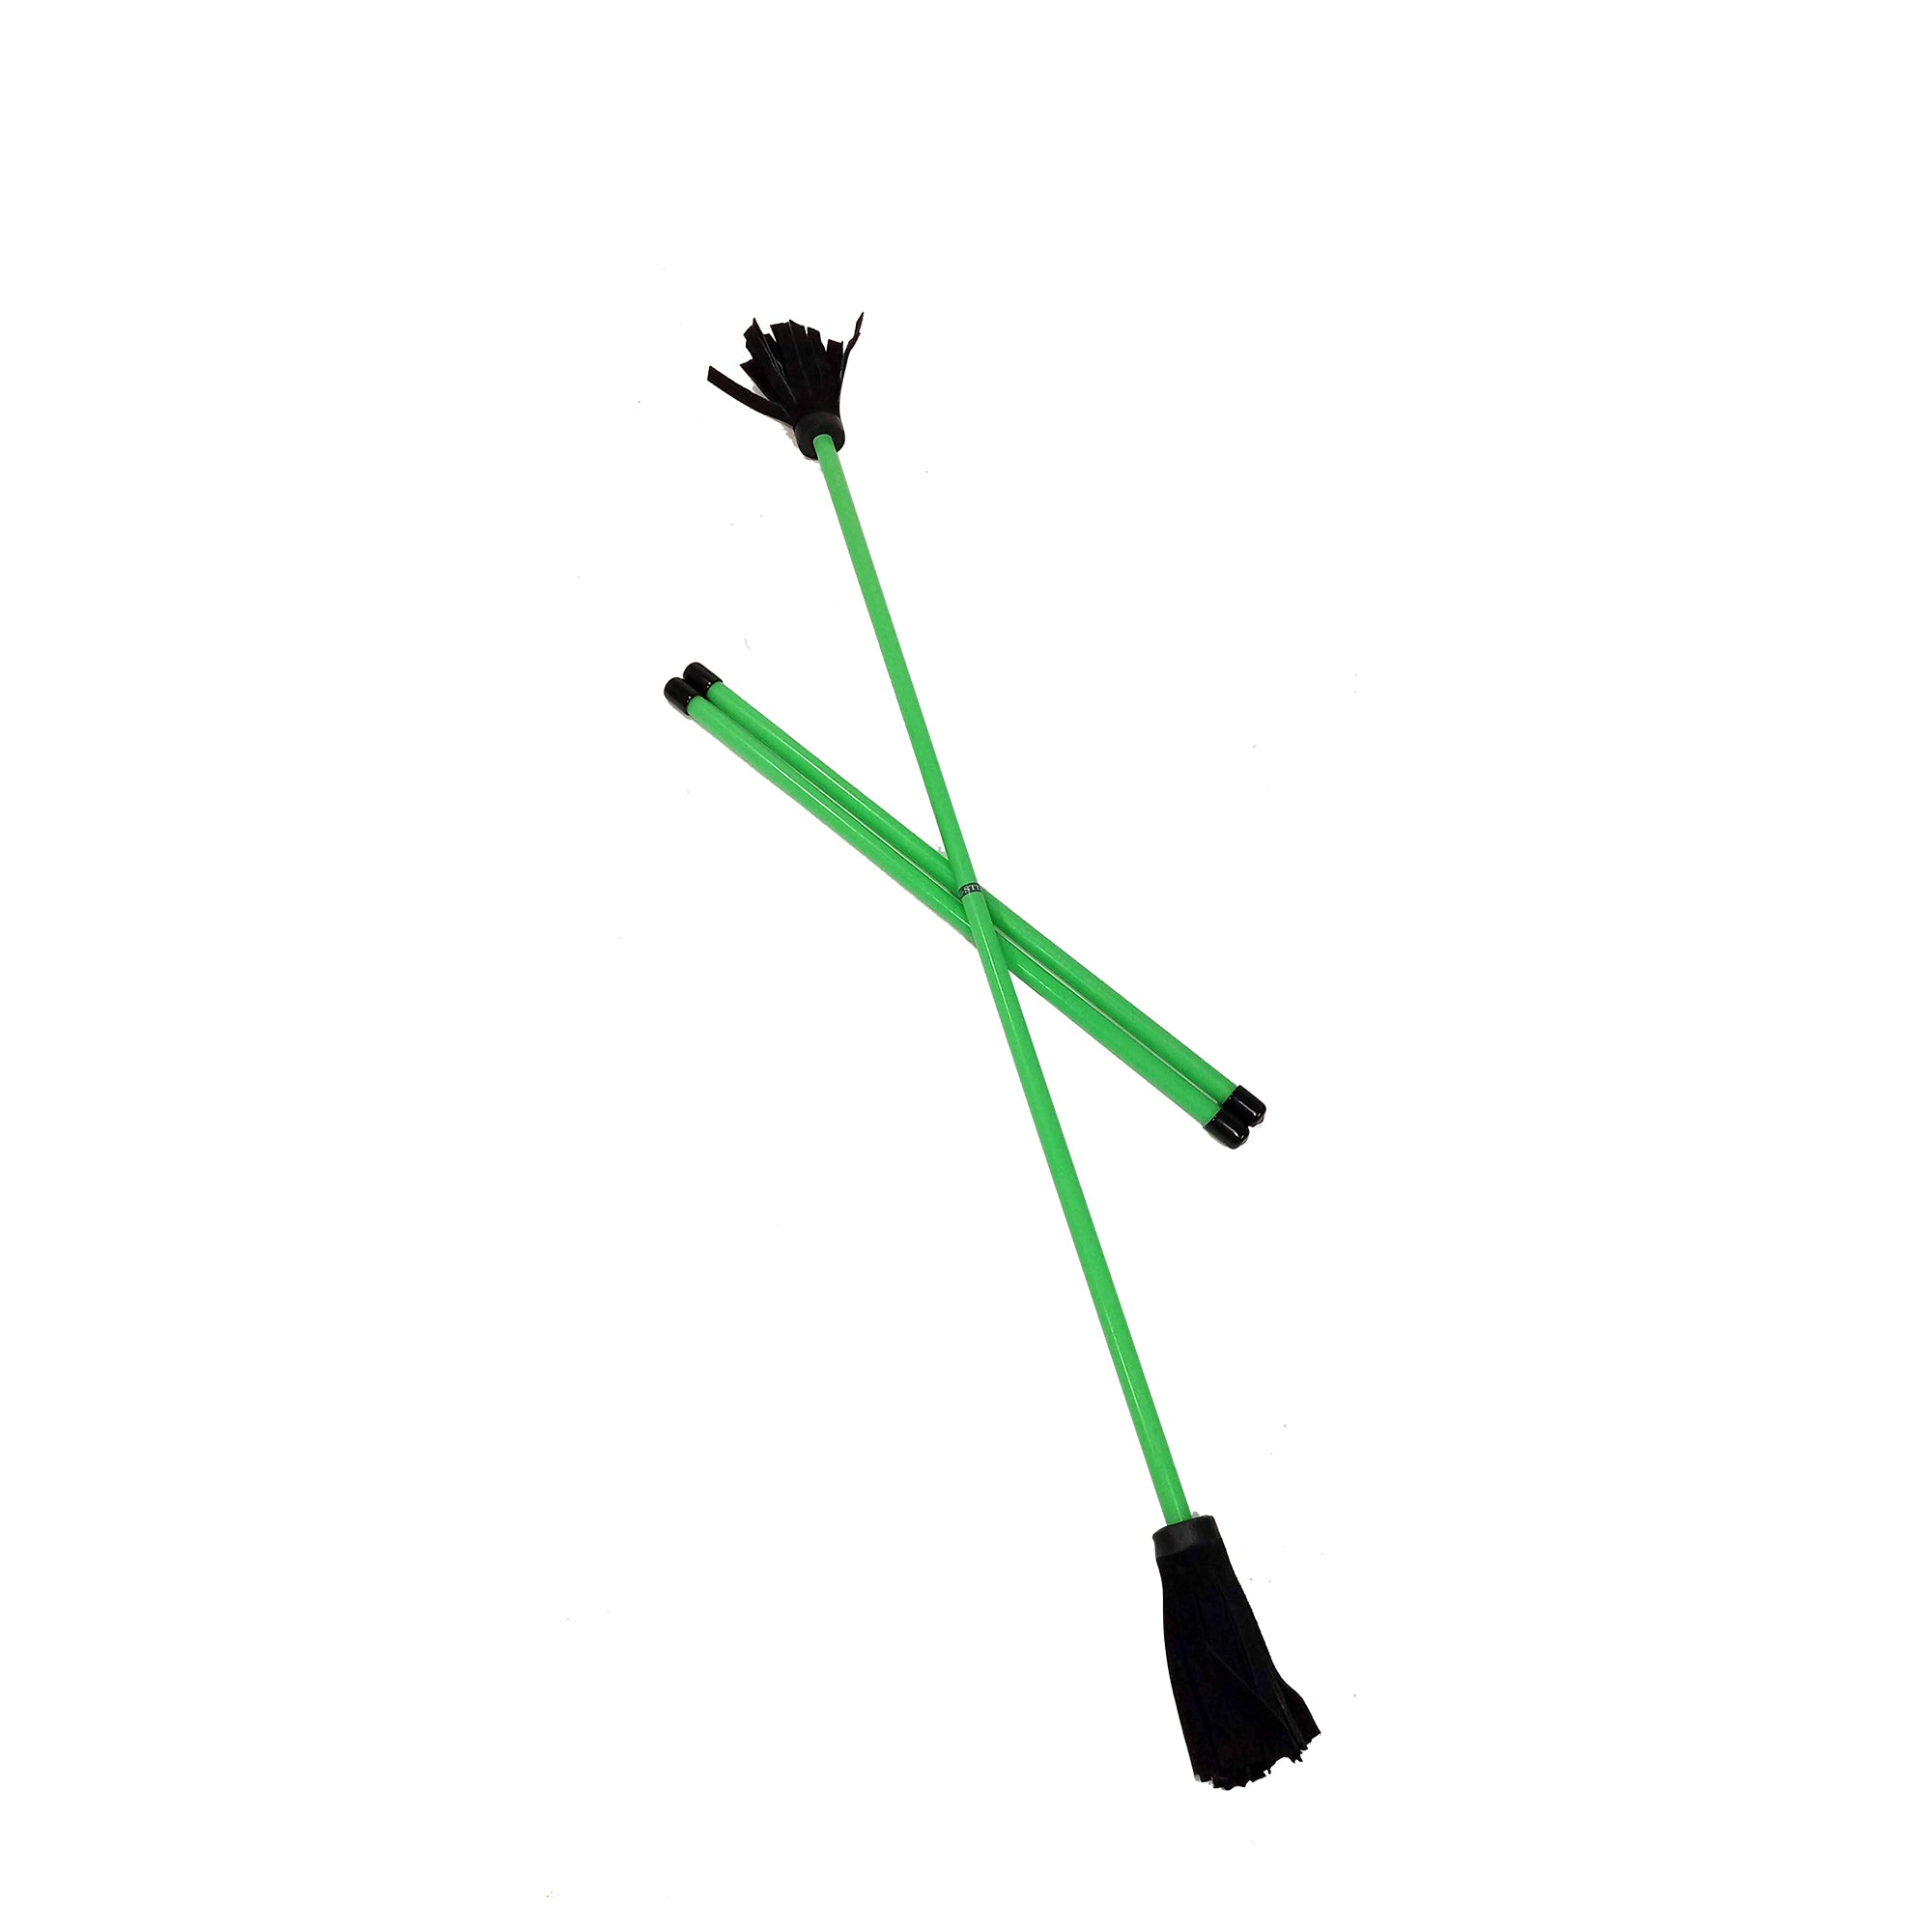 Z-Stix Professional Juggling Flower Sticks-Devil Sticks and 2 Hand Sticks, High Quality, Beginner Friendly - Neon Series Kids / Glow in The Dark